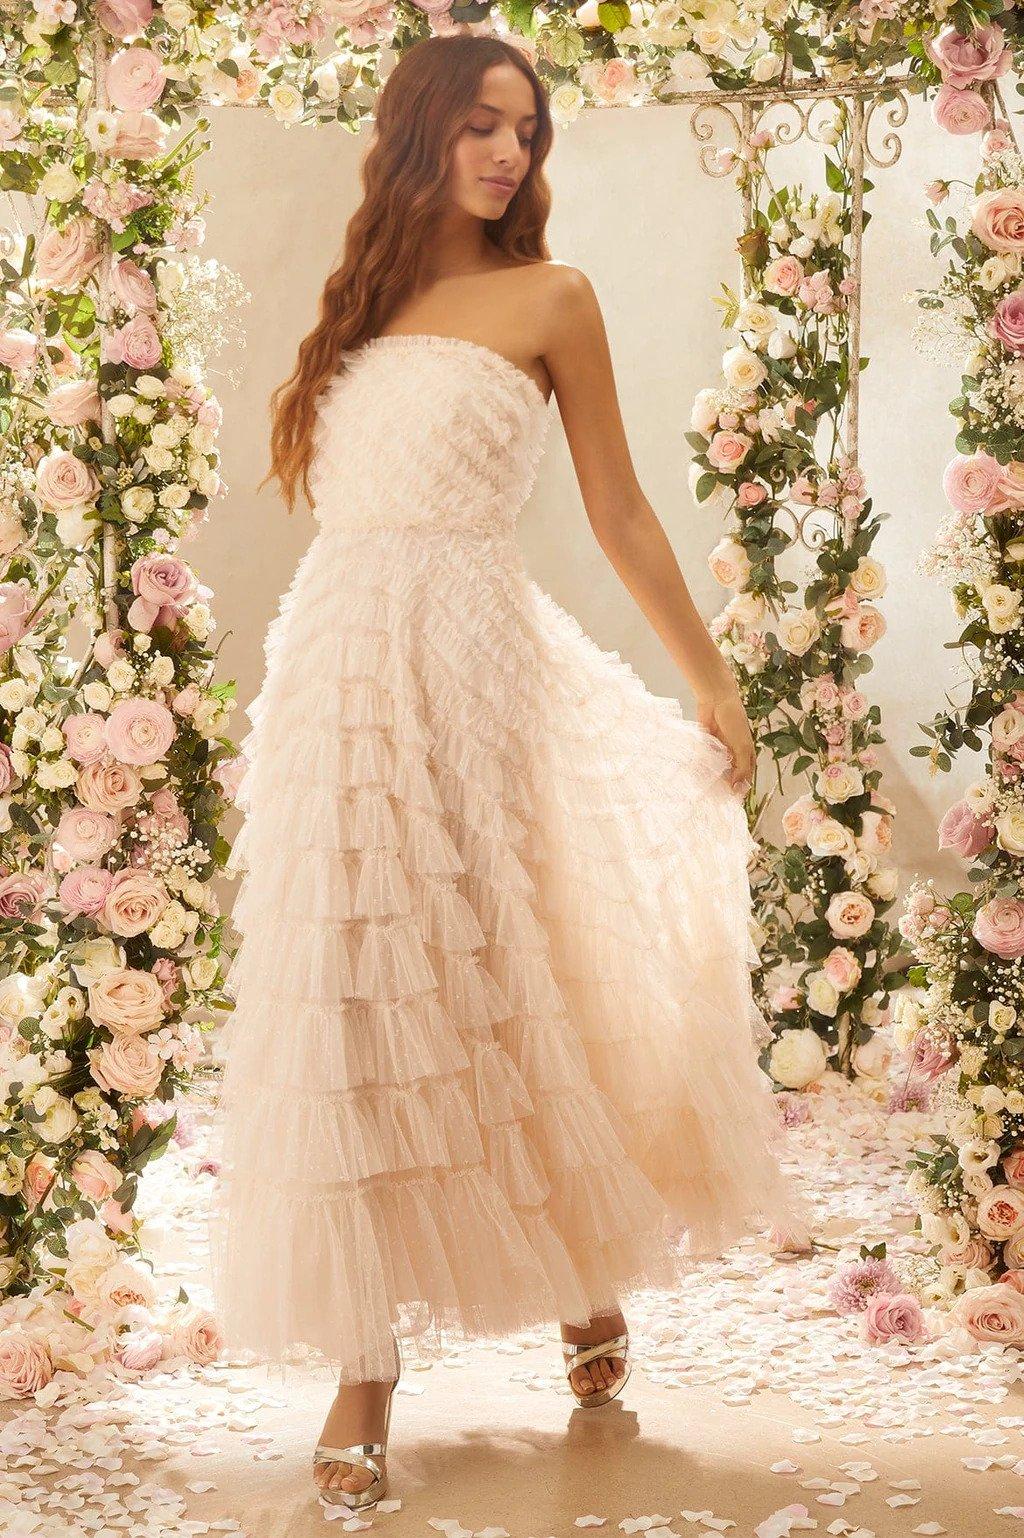 Garden Bridal Dresses, Outdoor Wedding Gowns